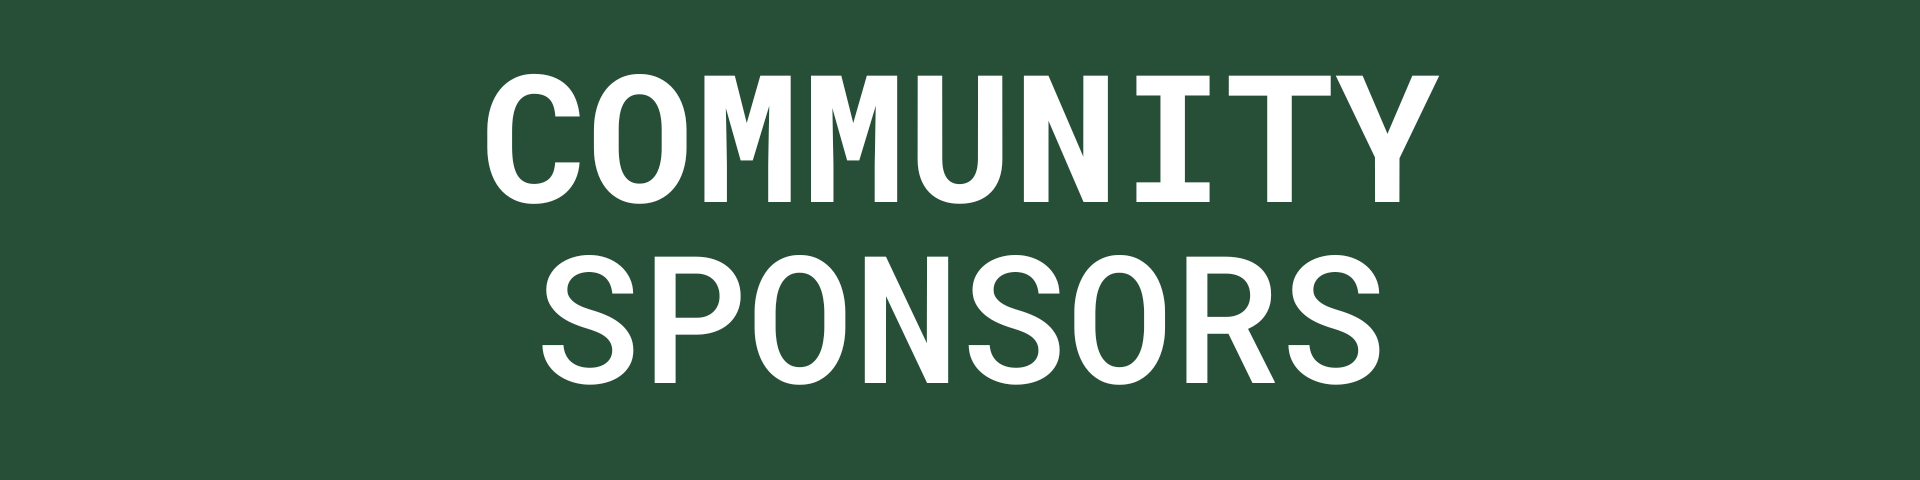 golf-sponsorship-community-s.png